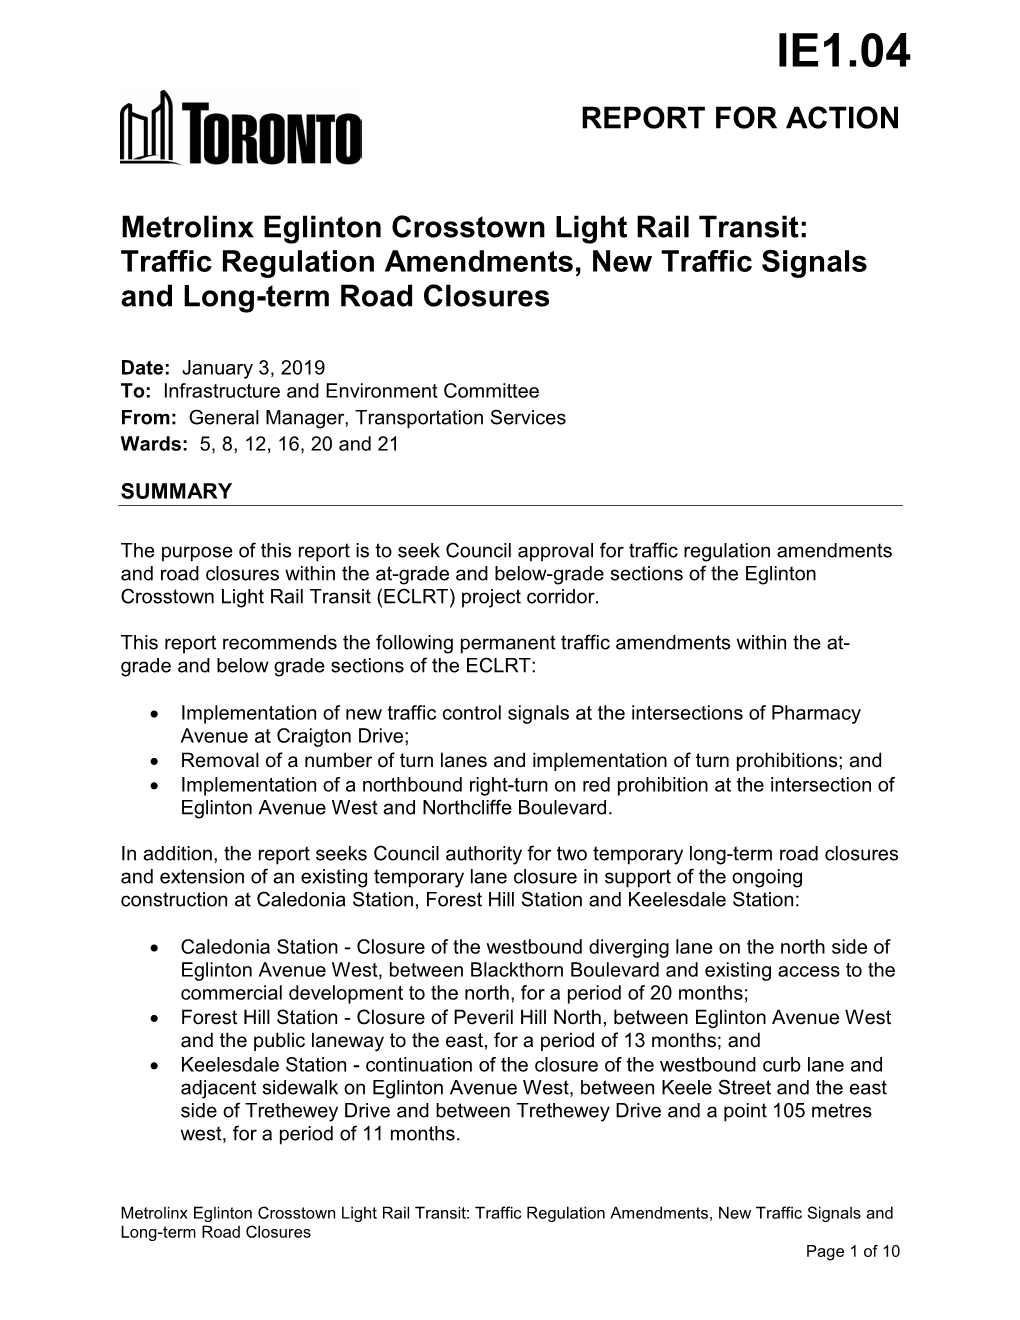 Metrolinx Eglinton Crosstown Light Rail Transit: Traffic Regulation Amendments, New Traffic Signals and Long-Term Road Closures